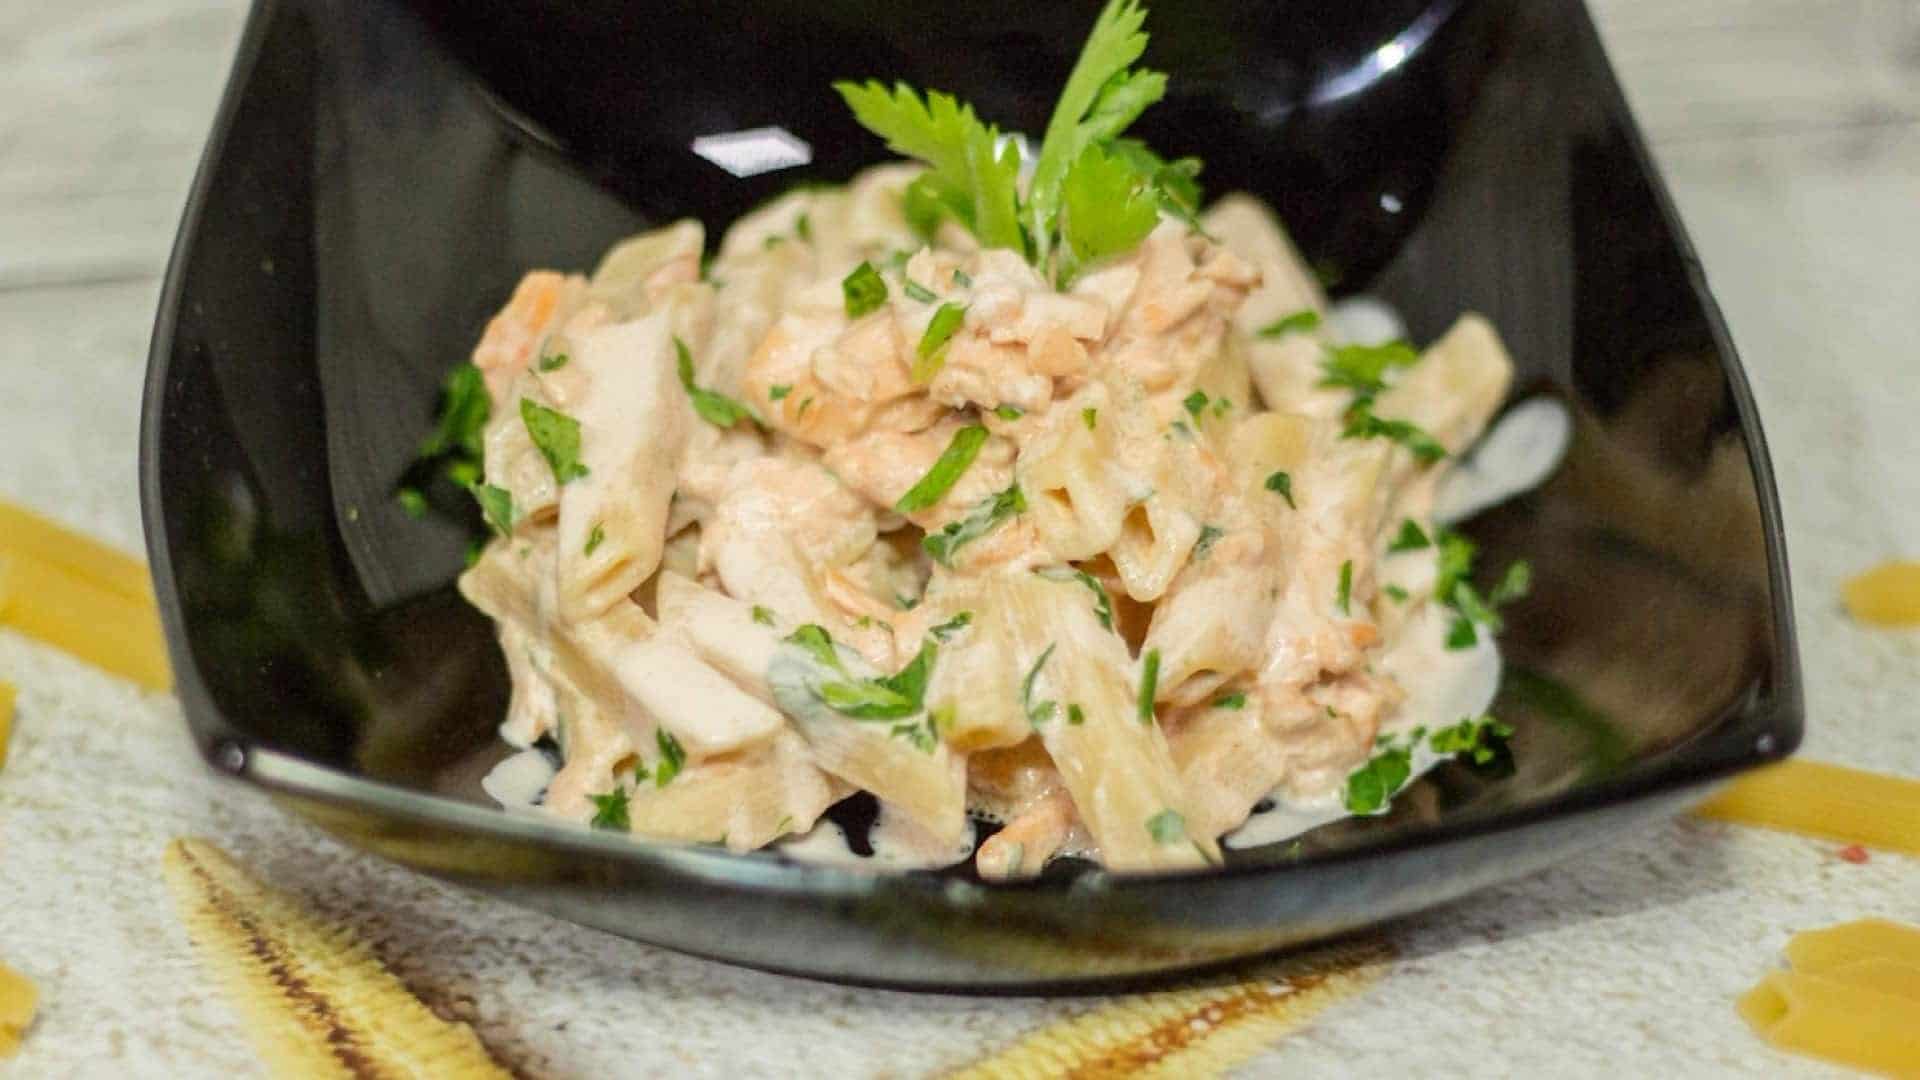 cucina sana: pasta al salmone light 